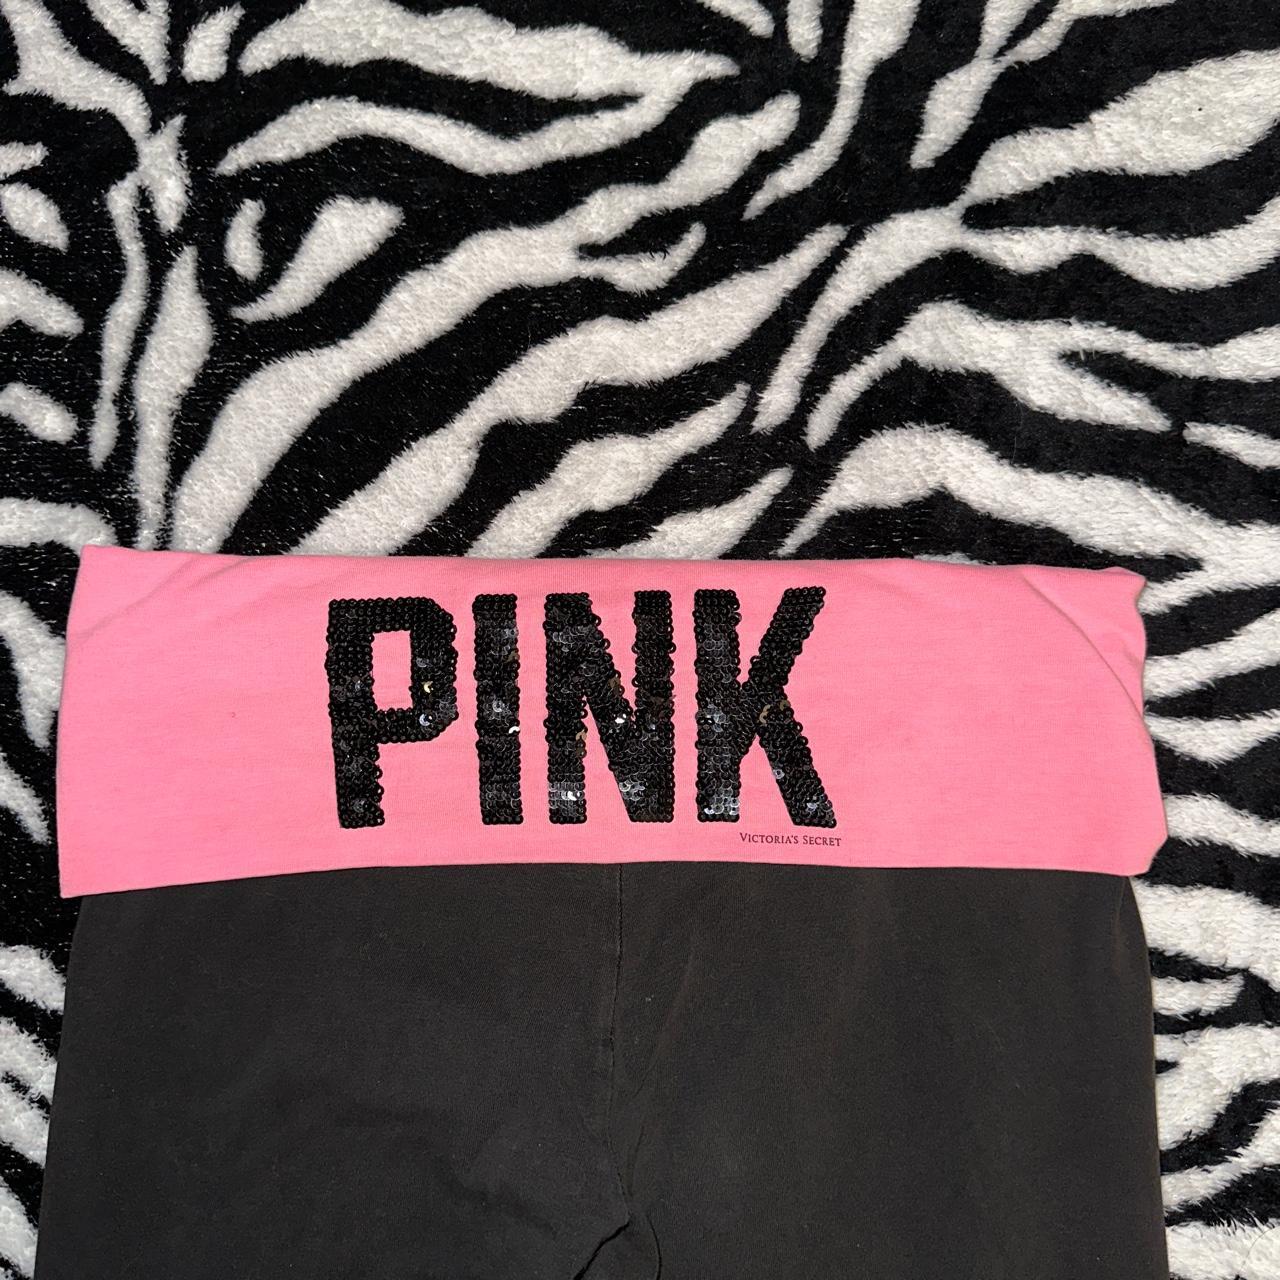 Victoria's Secret Pink And Black Leopard Print Fold Over Leggings